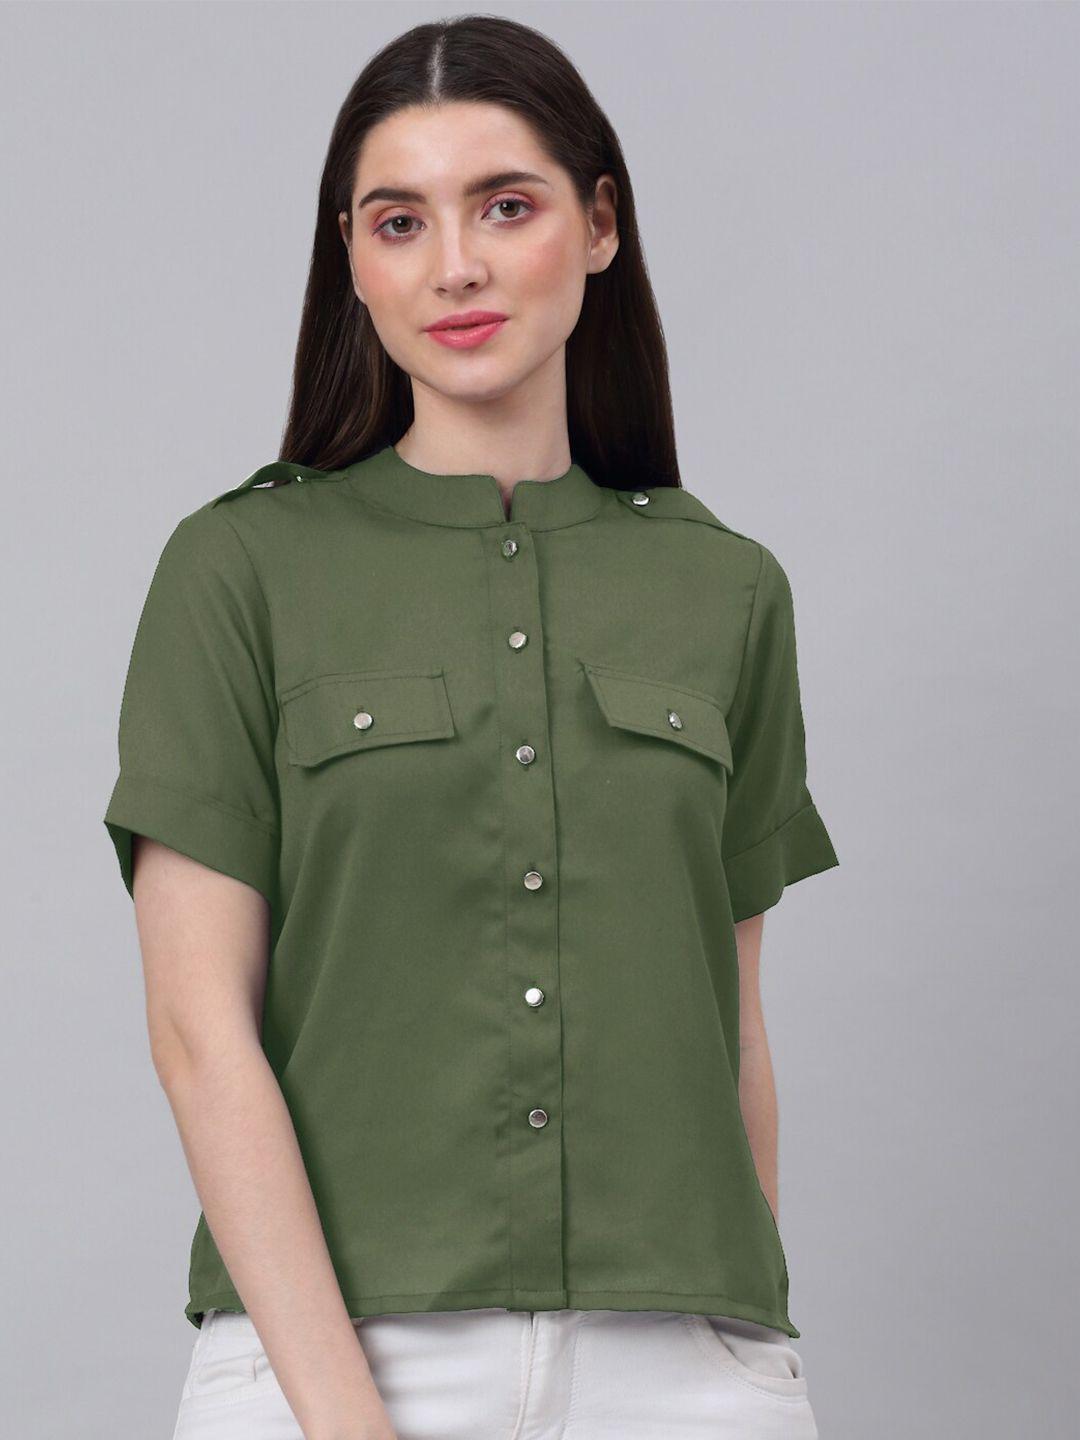 neudis-women-olive-green-mandarin-collar-shirt-style-top